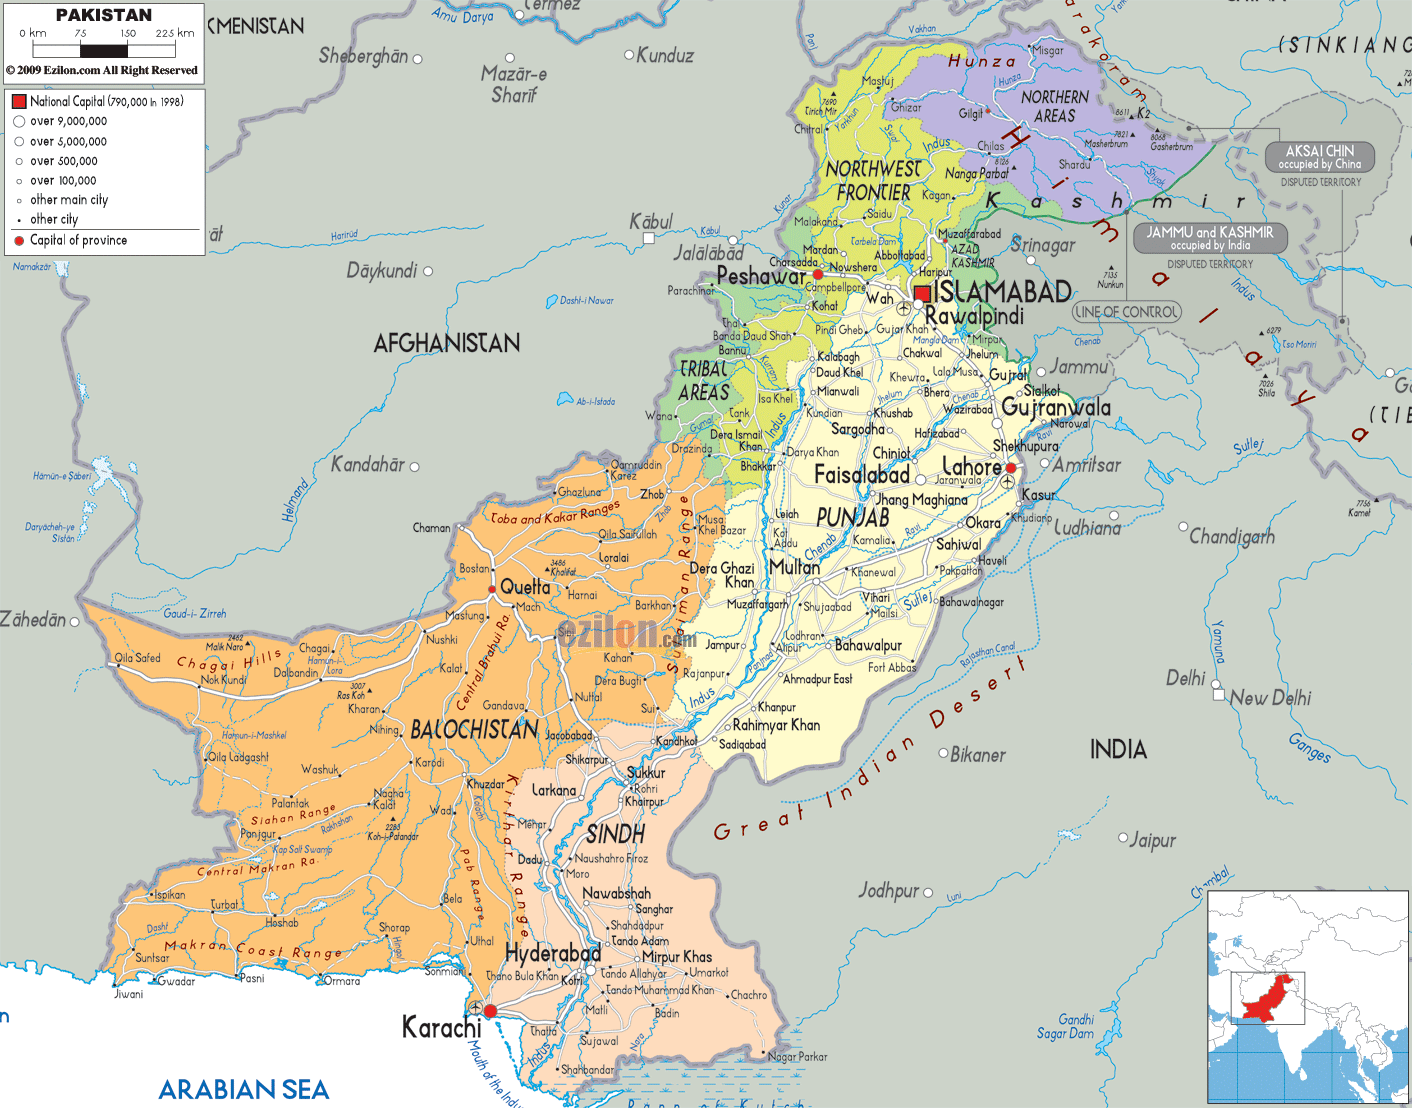 Pakistan Tourism Guide: Maps of Pakistan